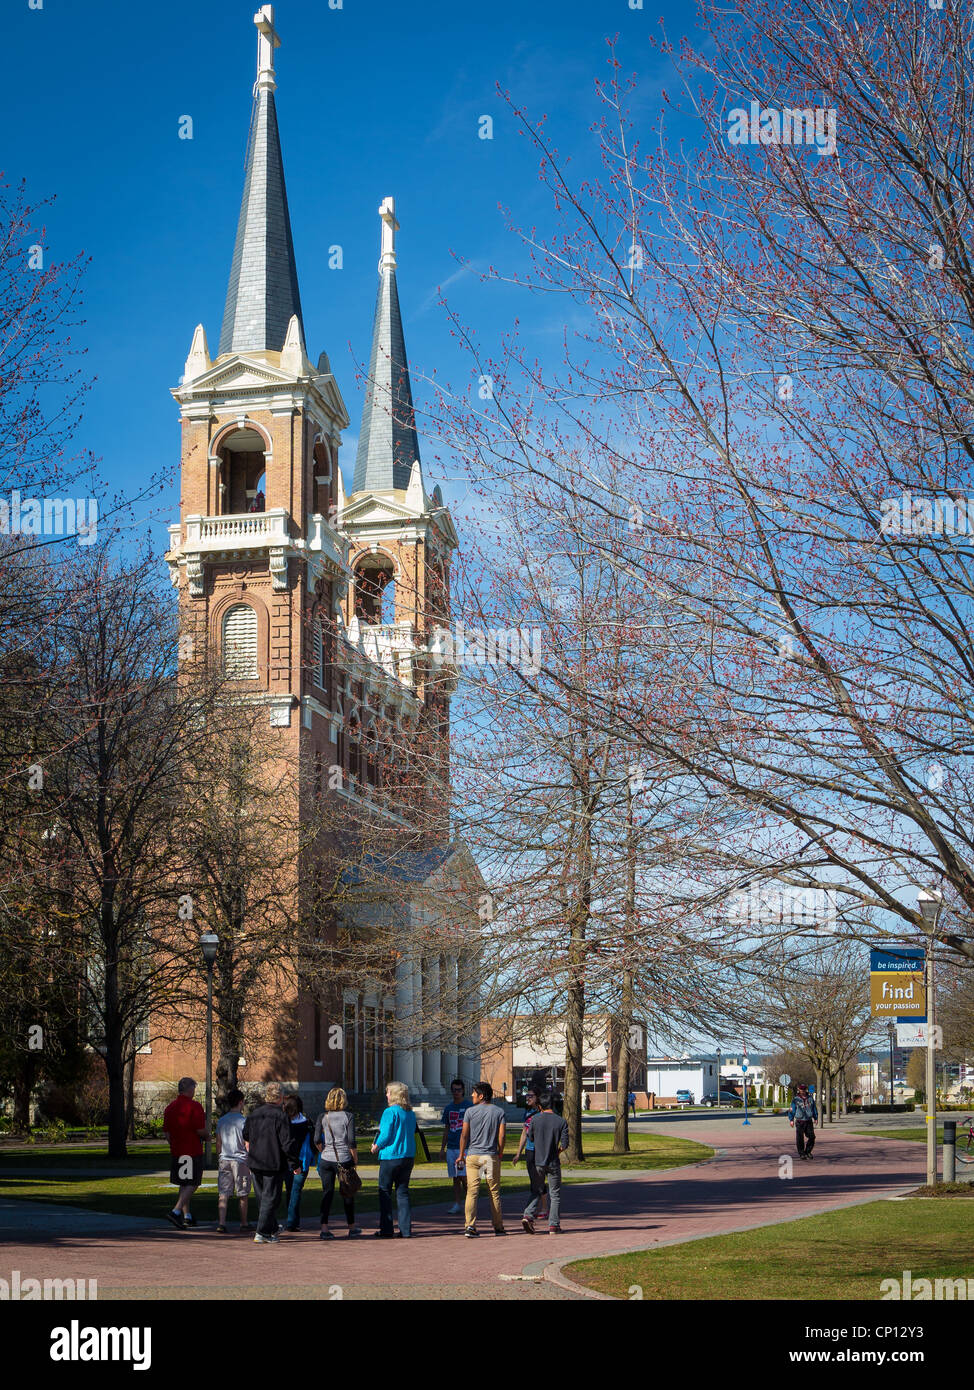 St Aloysius Church at Gonzaga University in Spokane, Washington state. Stock Photo